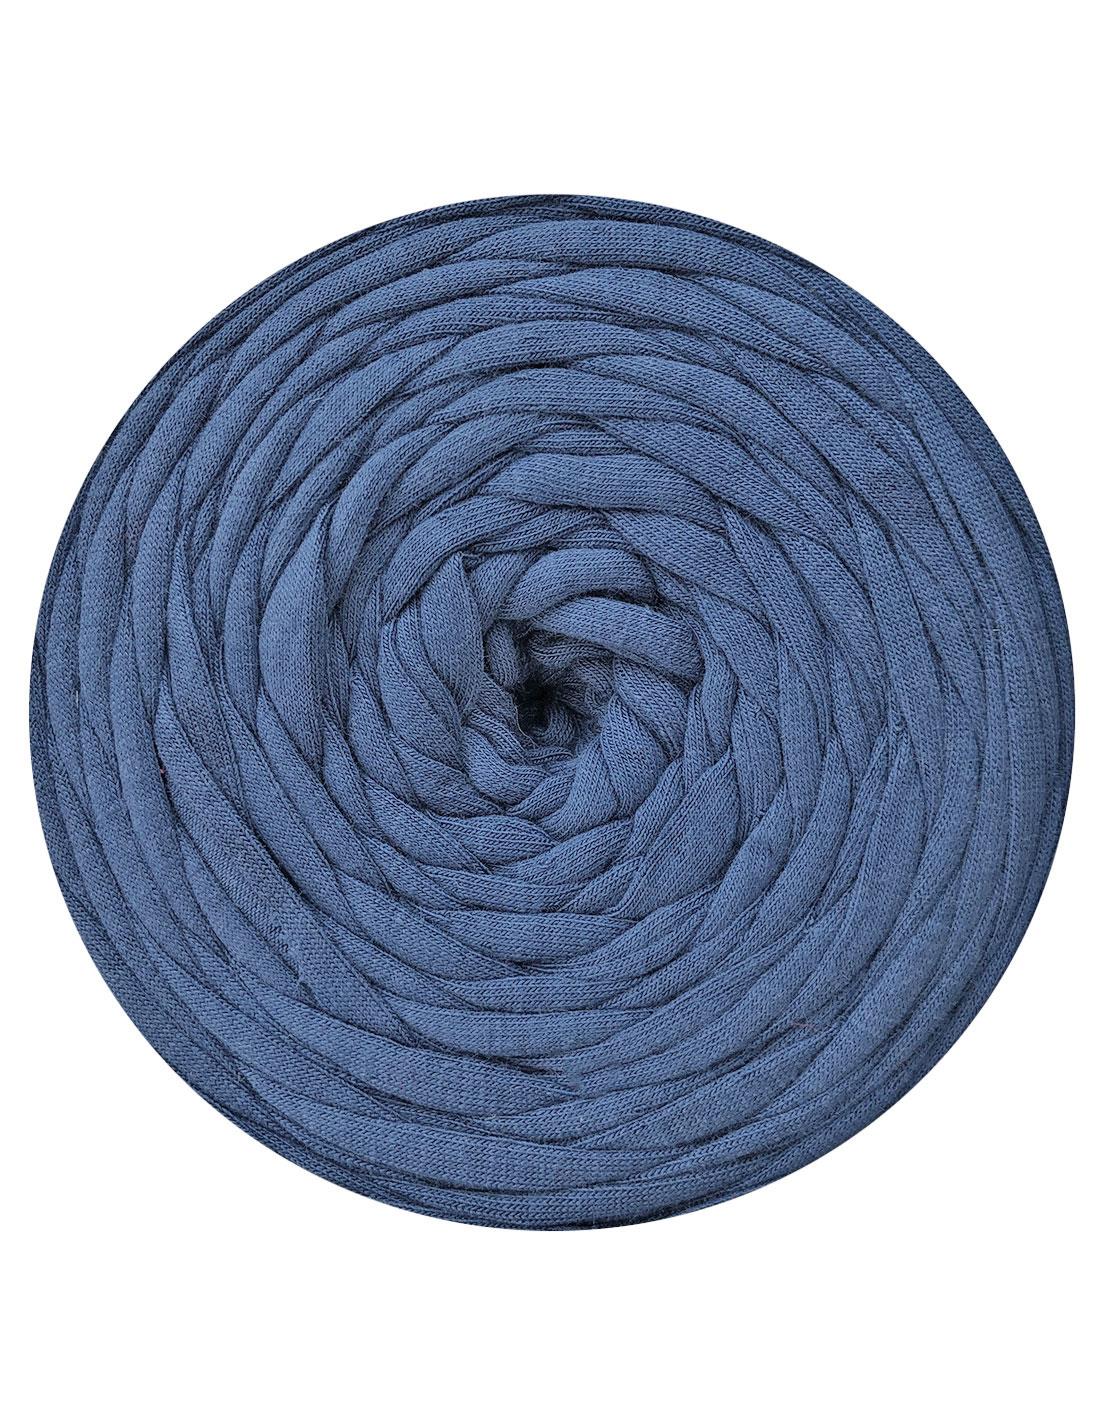 Persian blue t-shirt yarn by Hoooked Zpagetti (100-120m)